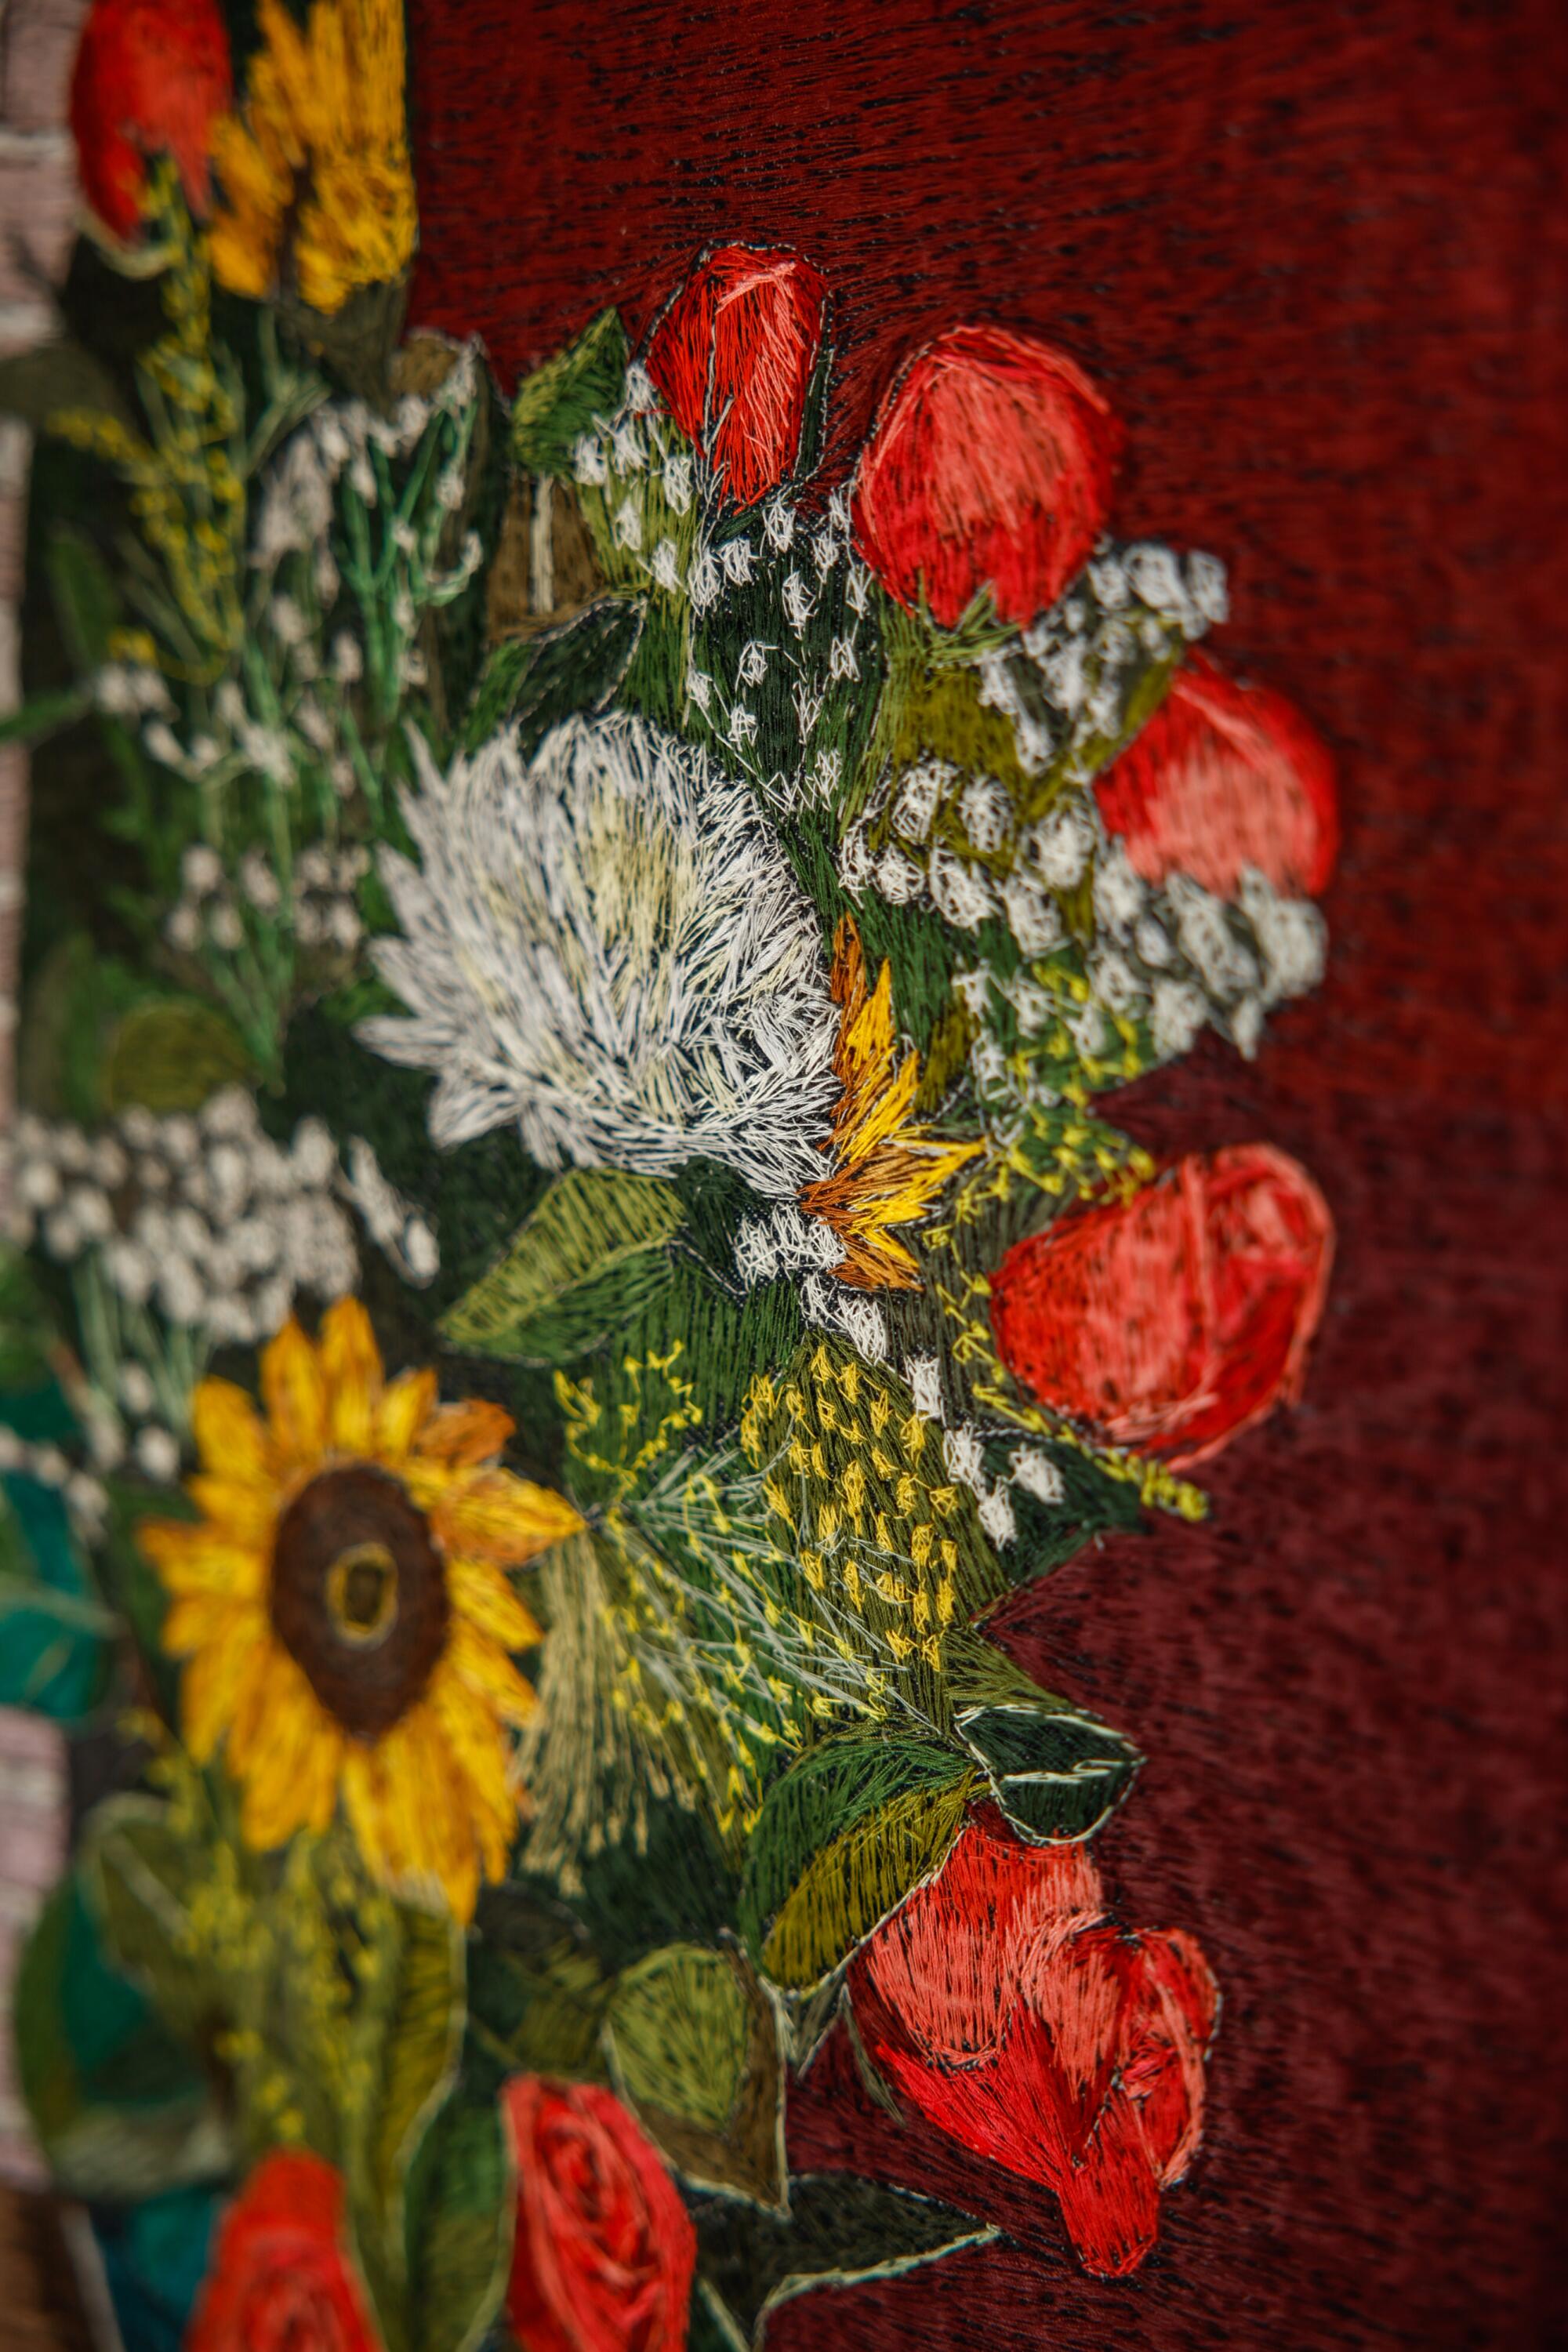 A closeup image of textile flowers.